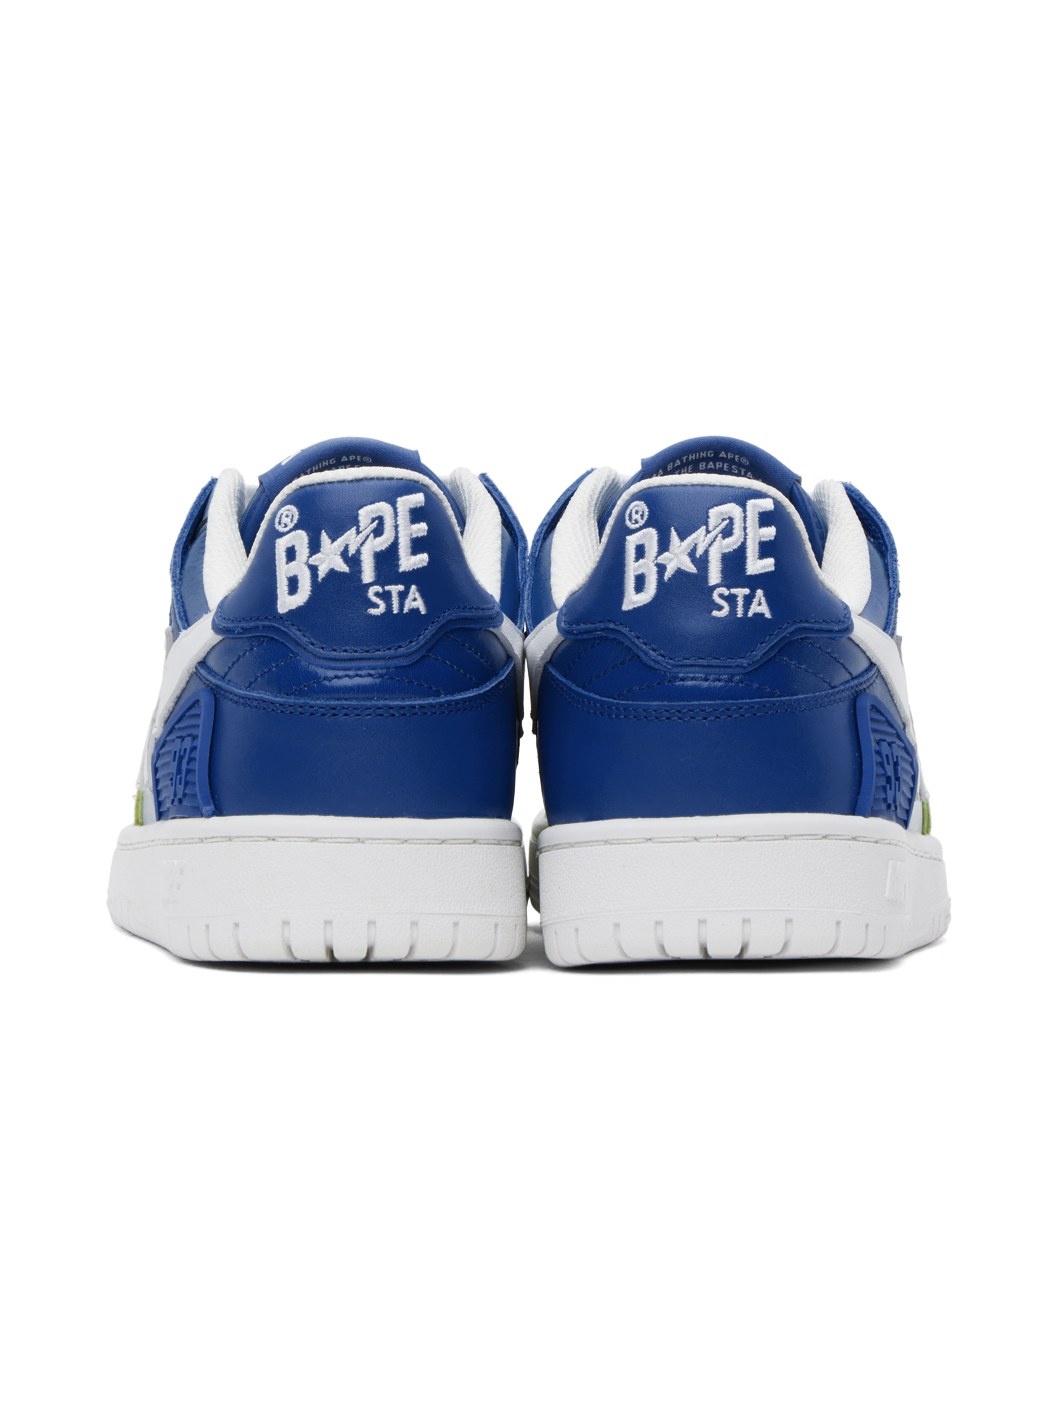 Blue SK8 STA #1 Sneakers - 2